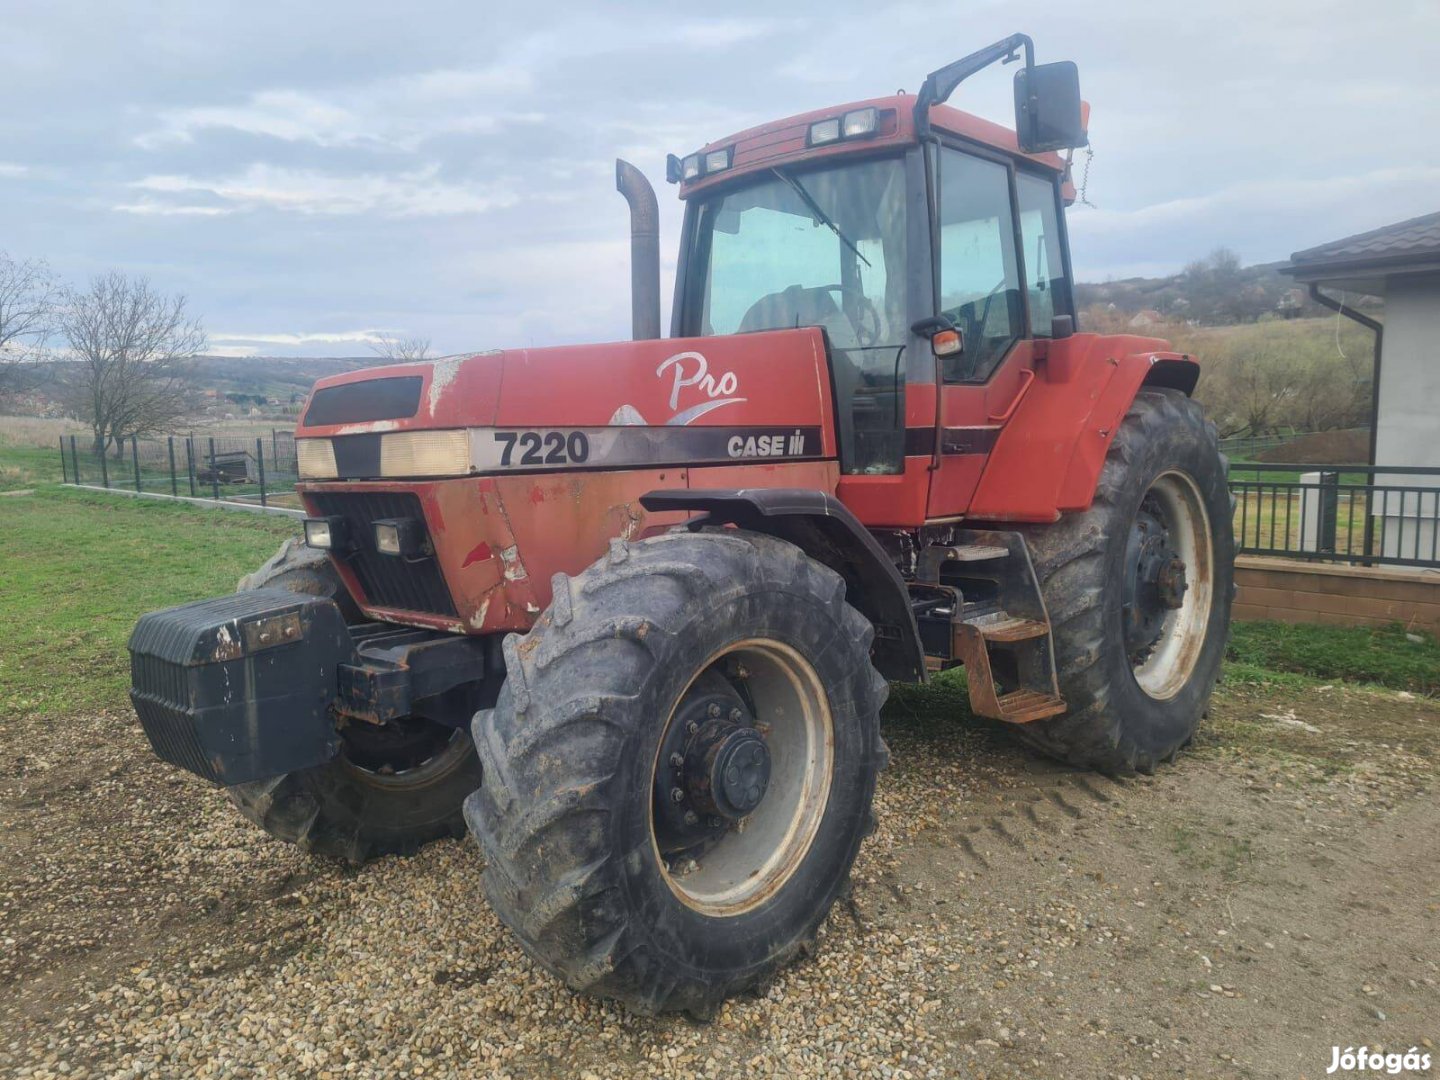 Case 7220 Pro traktor